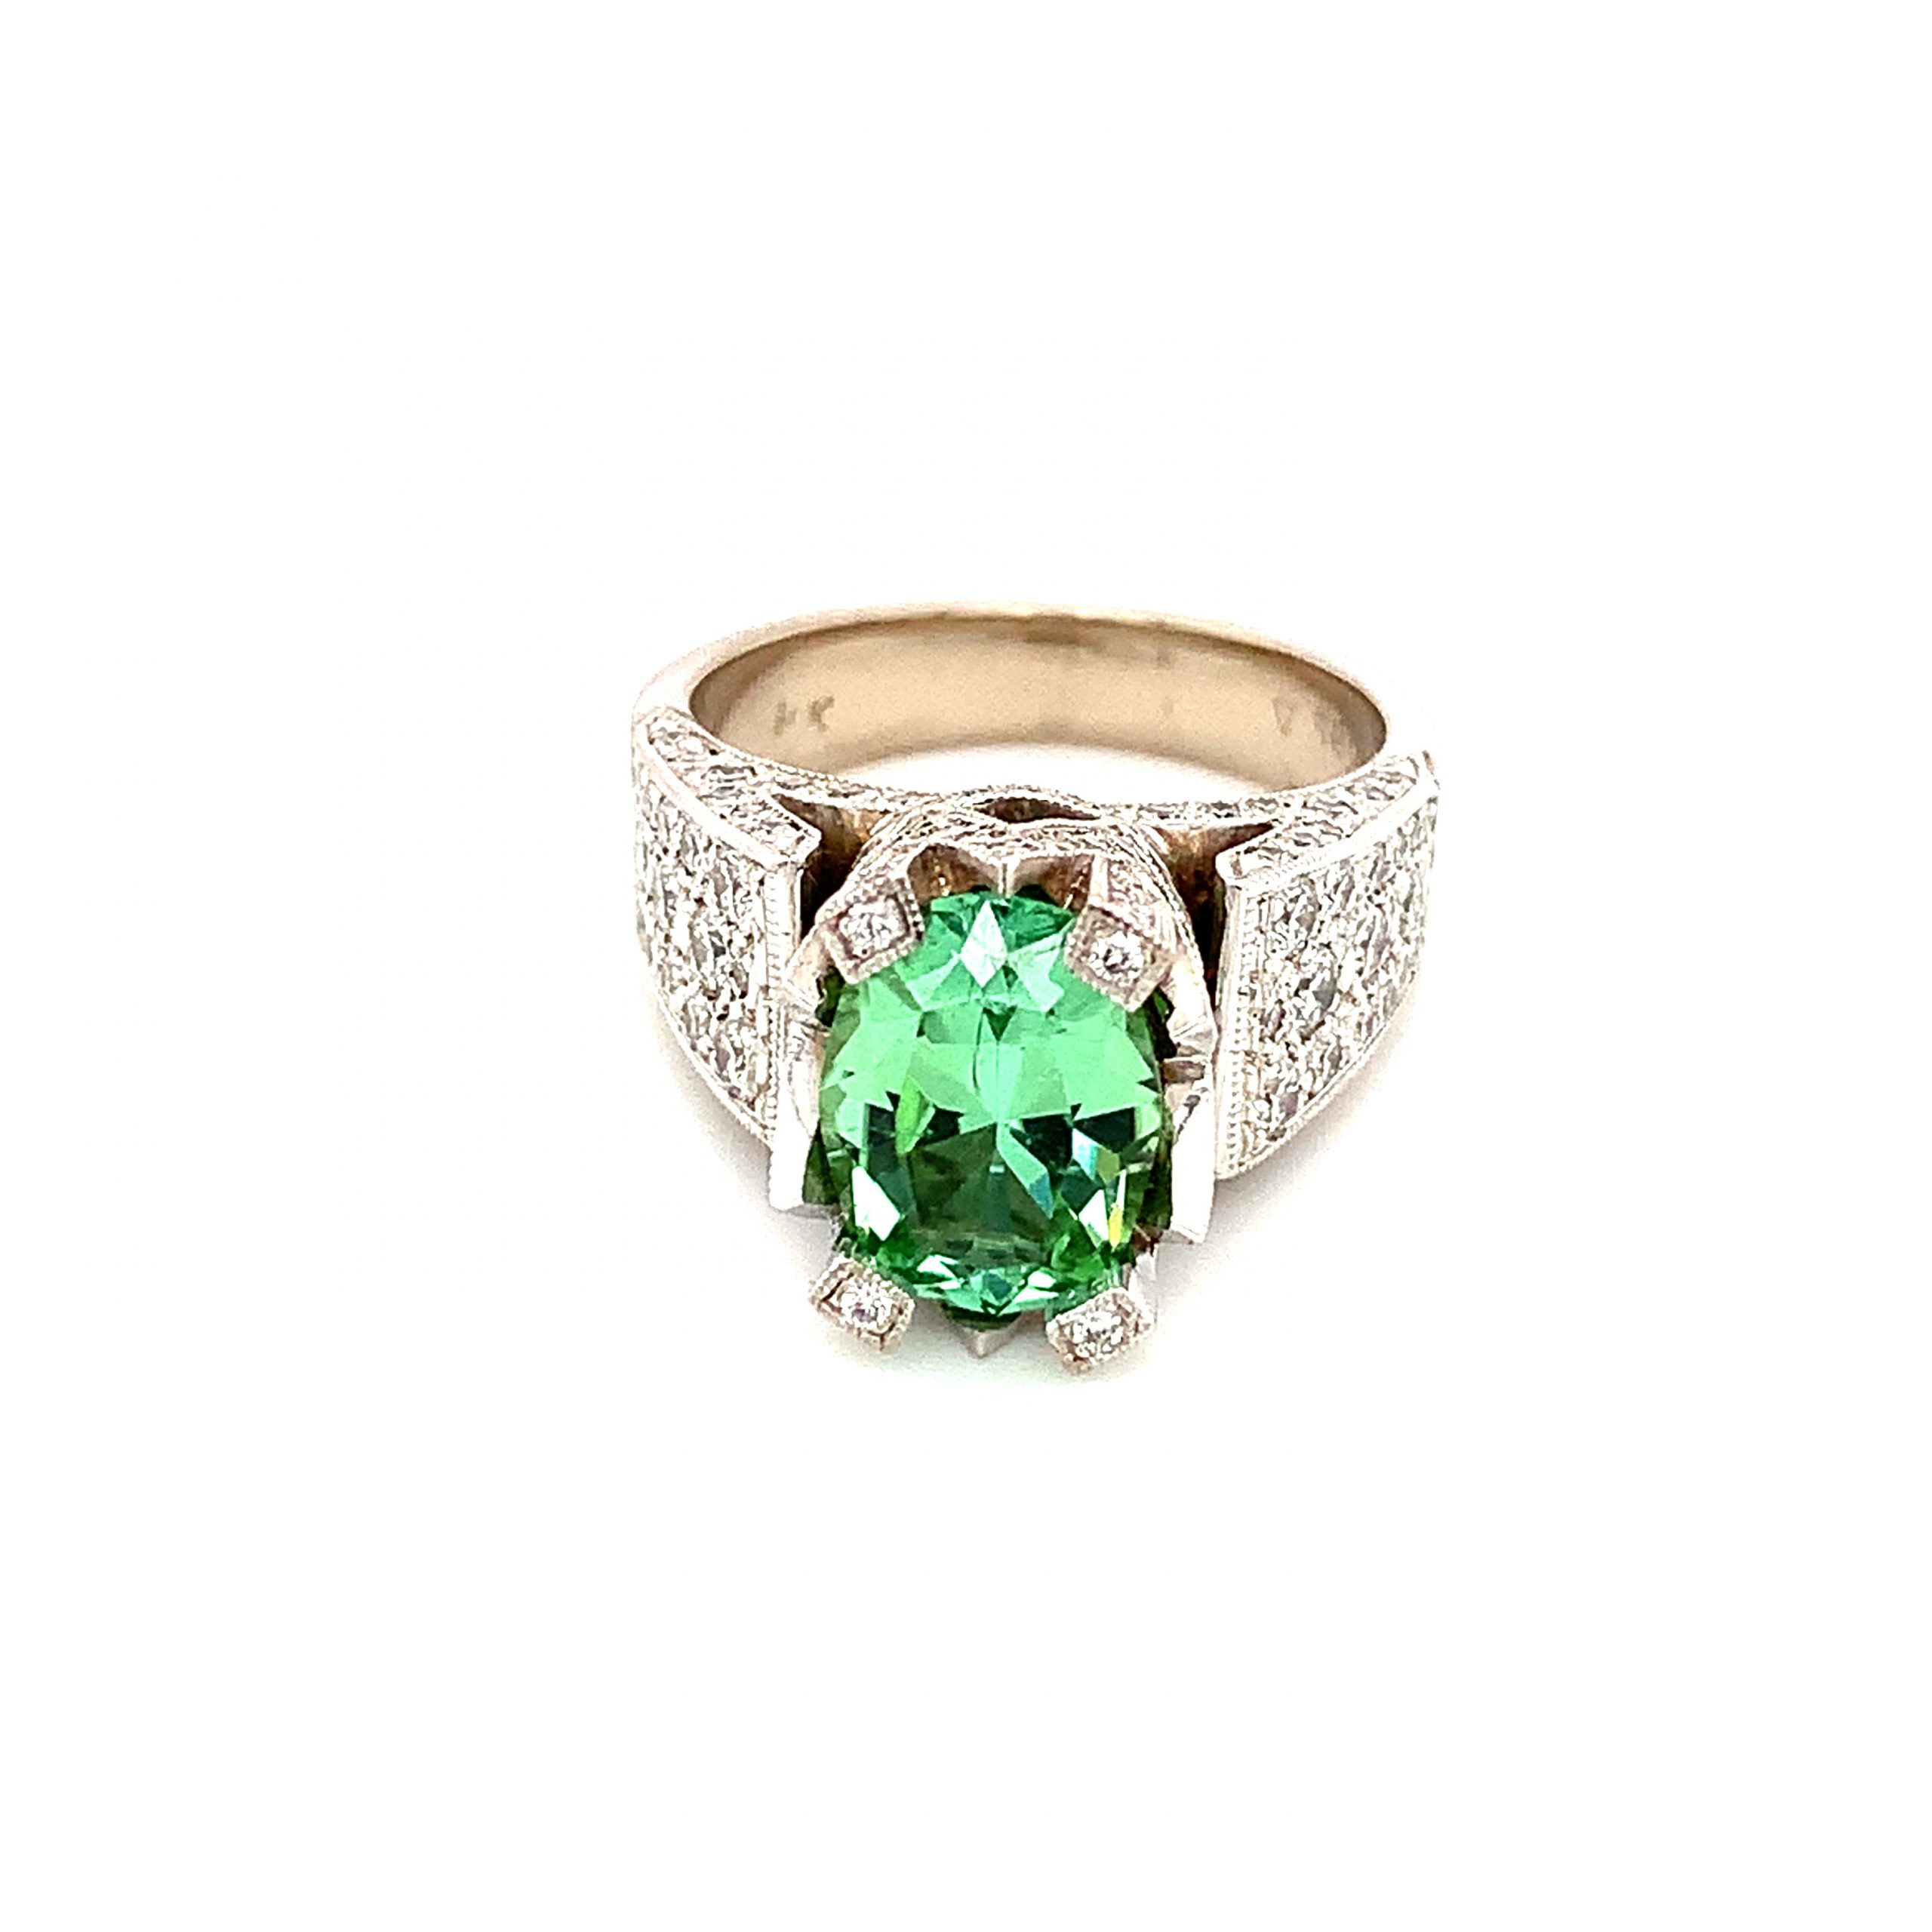 18ct White Gold Diamond and Cushion Cut Green Tourmaline Ring